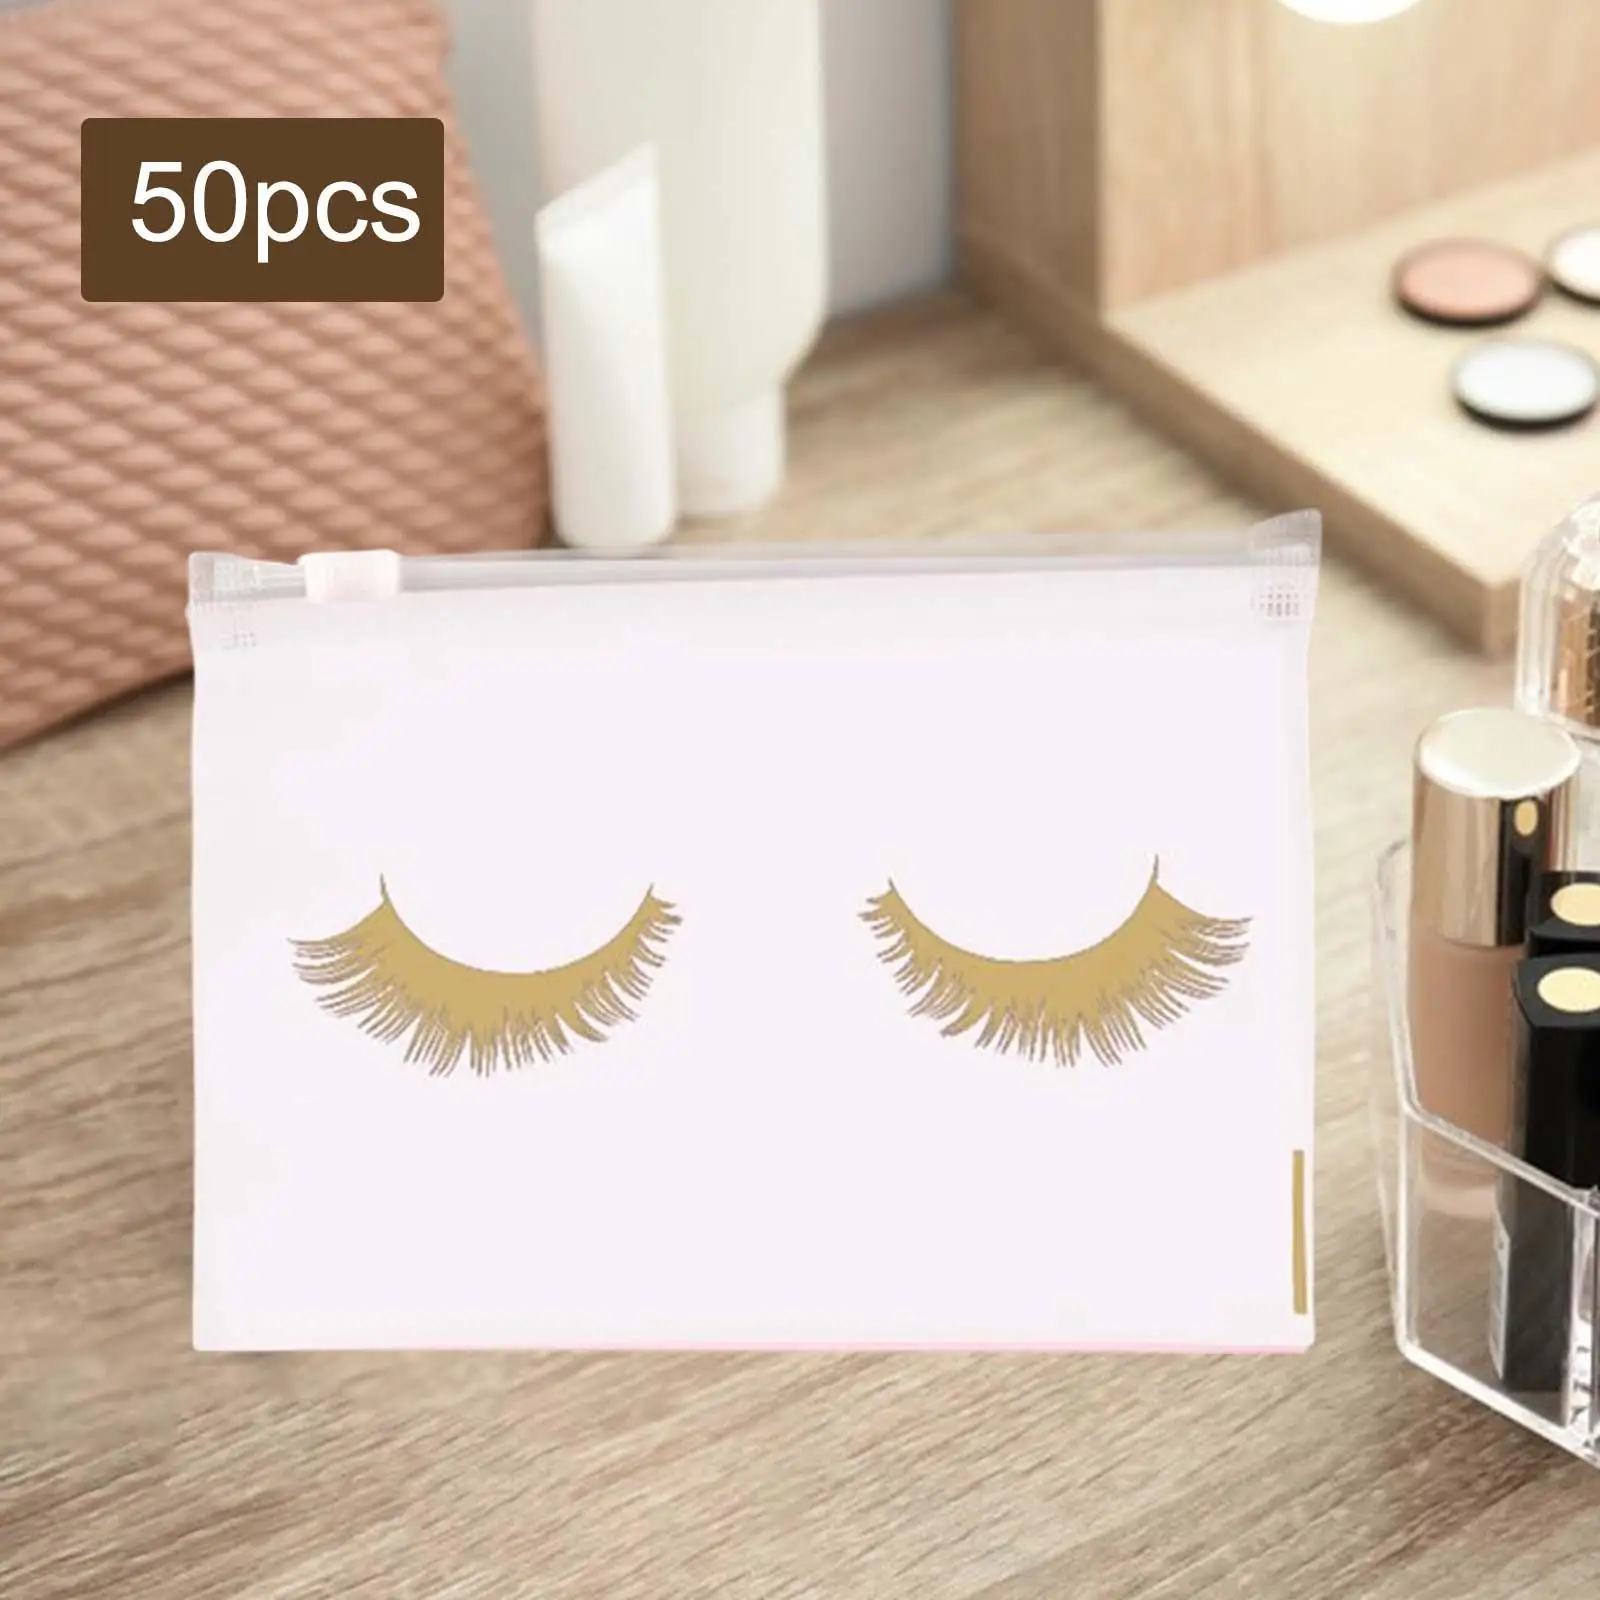 50Pcs Eyelash Bags Makeup Bags with Zipper Practical for Women Girls Pouch